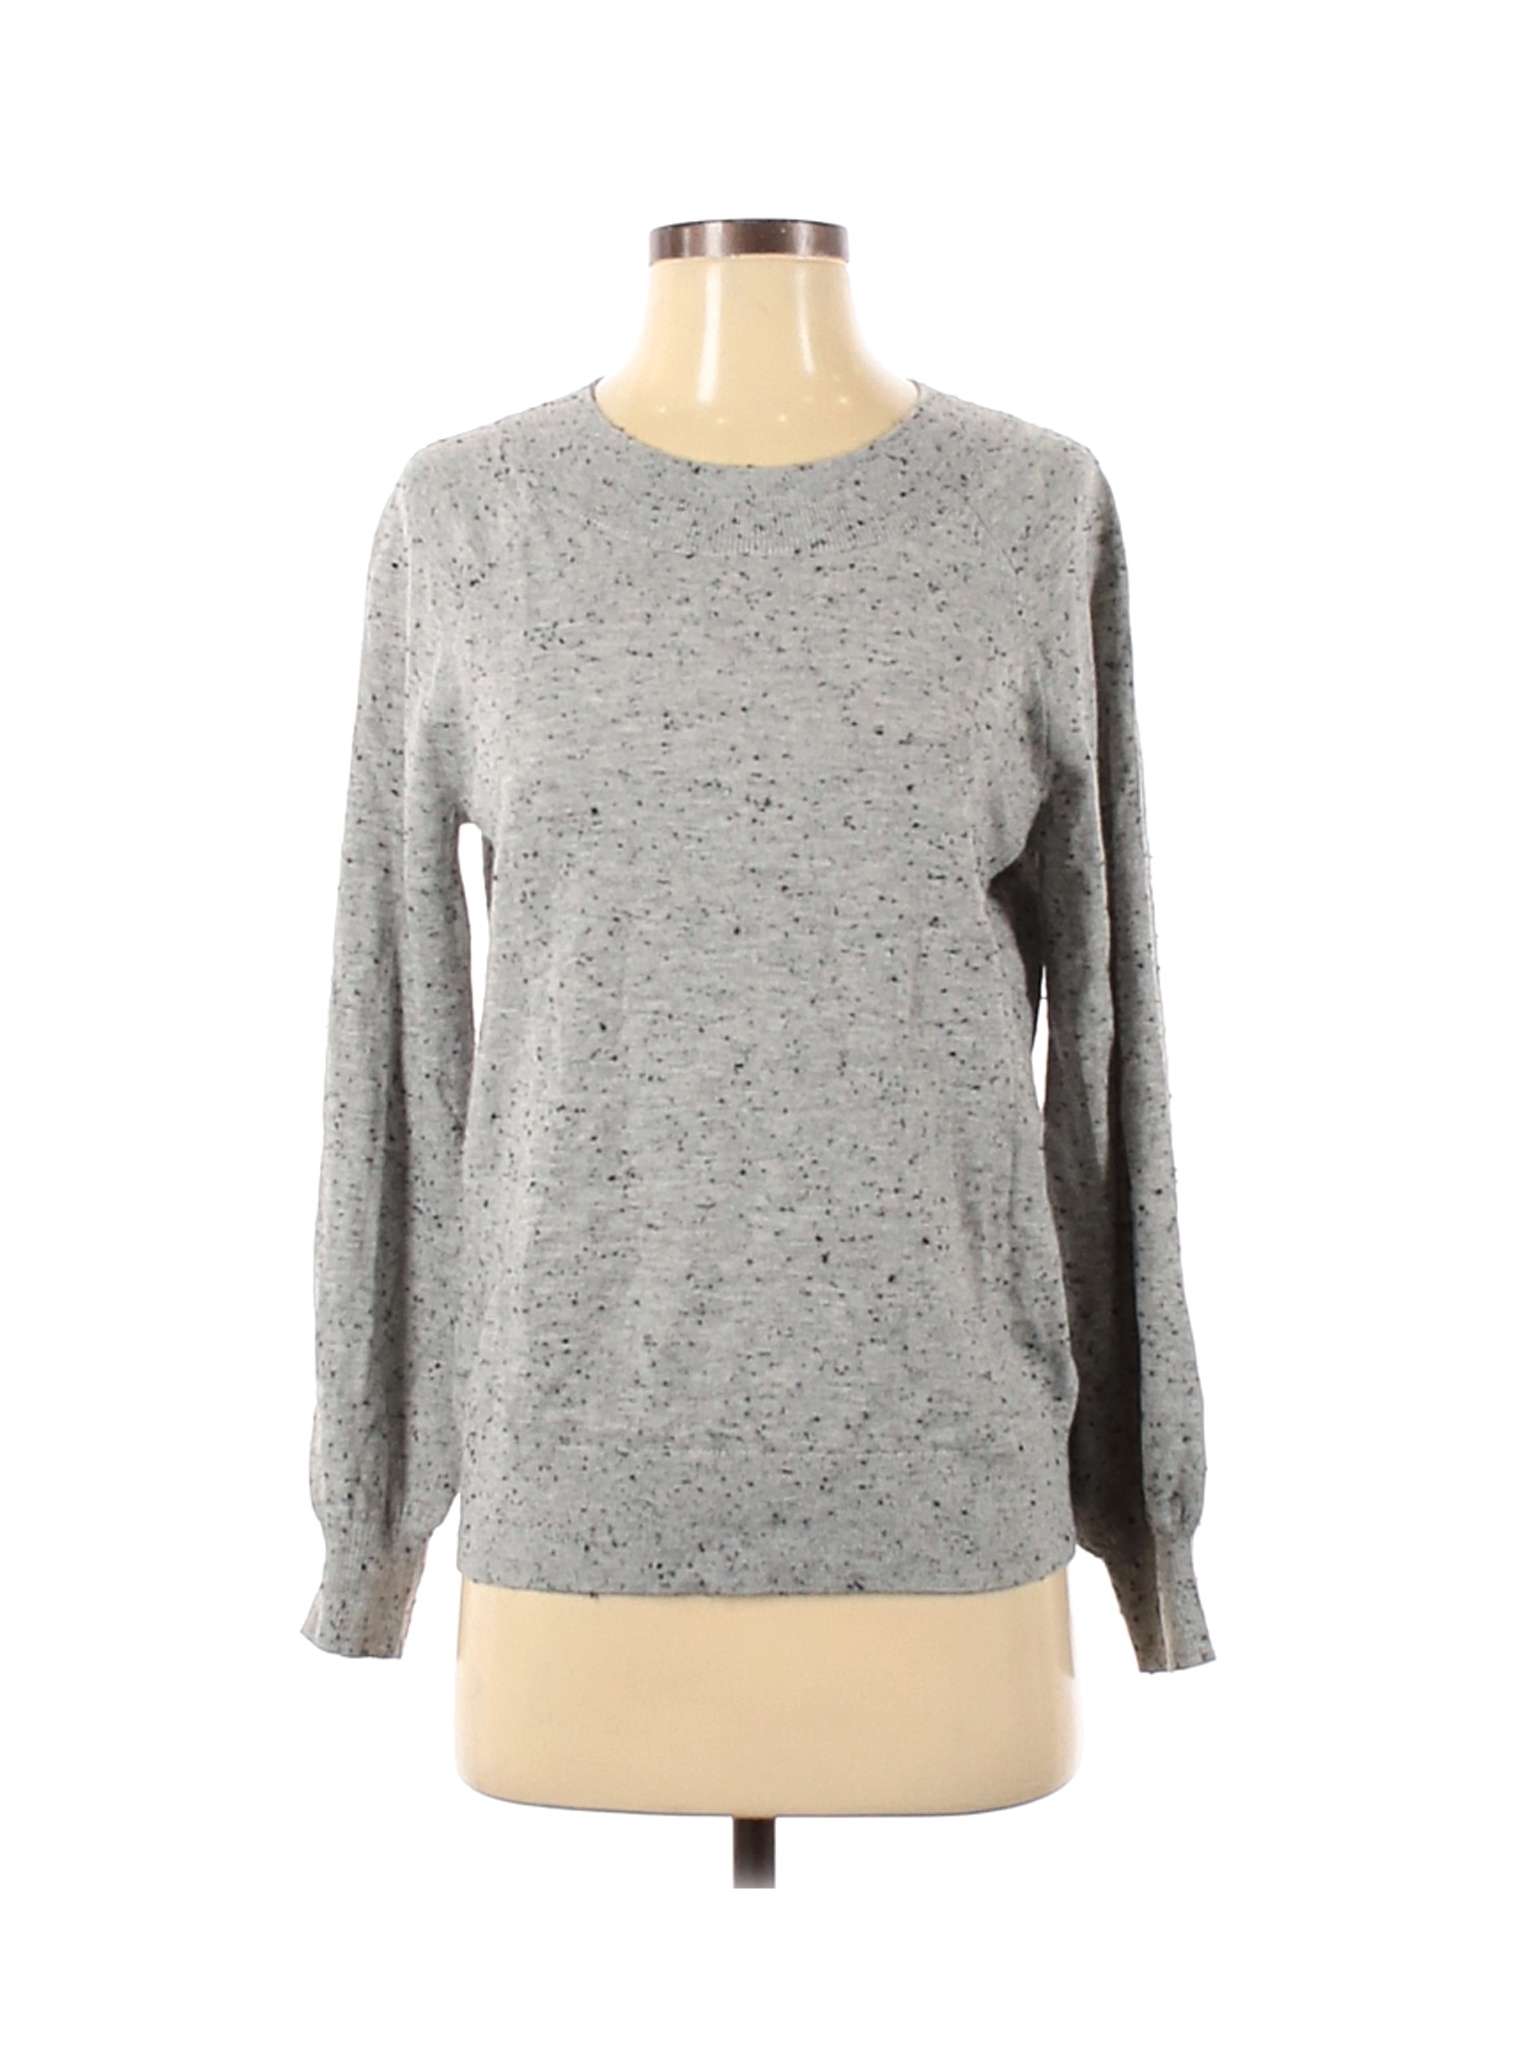 NWT Ann Taylor LOFT Women Gray Pullover Sweater S | eBay